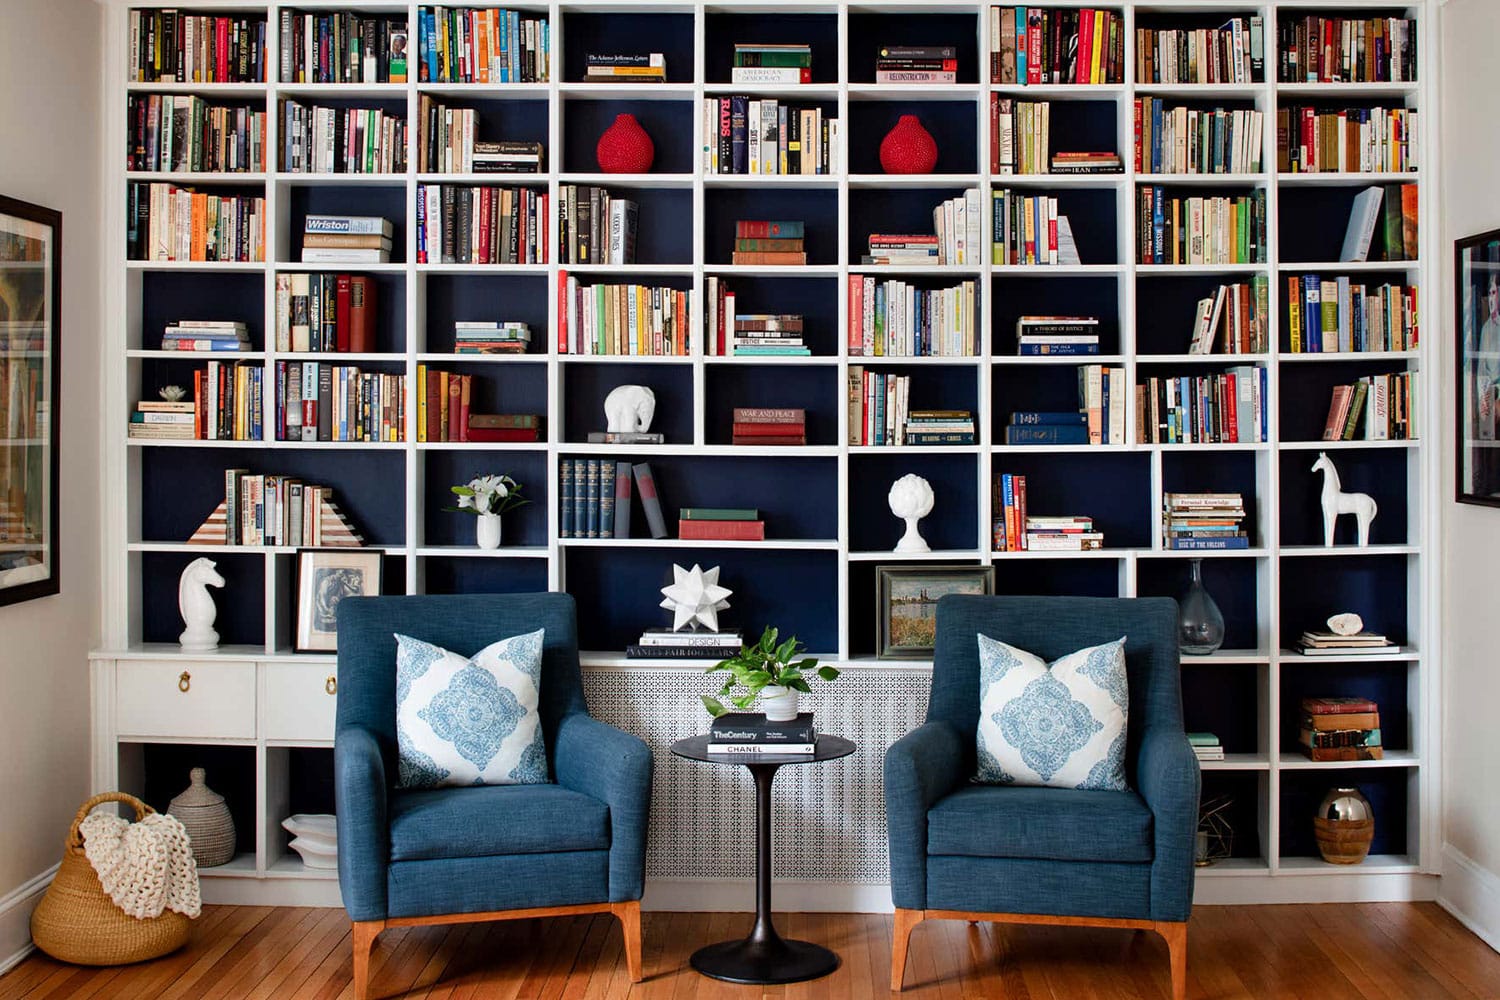 Decorating With Books: 13 Stylish Ways To Display Books